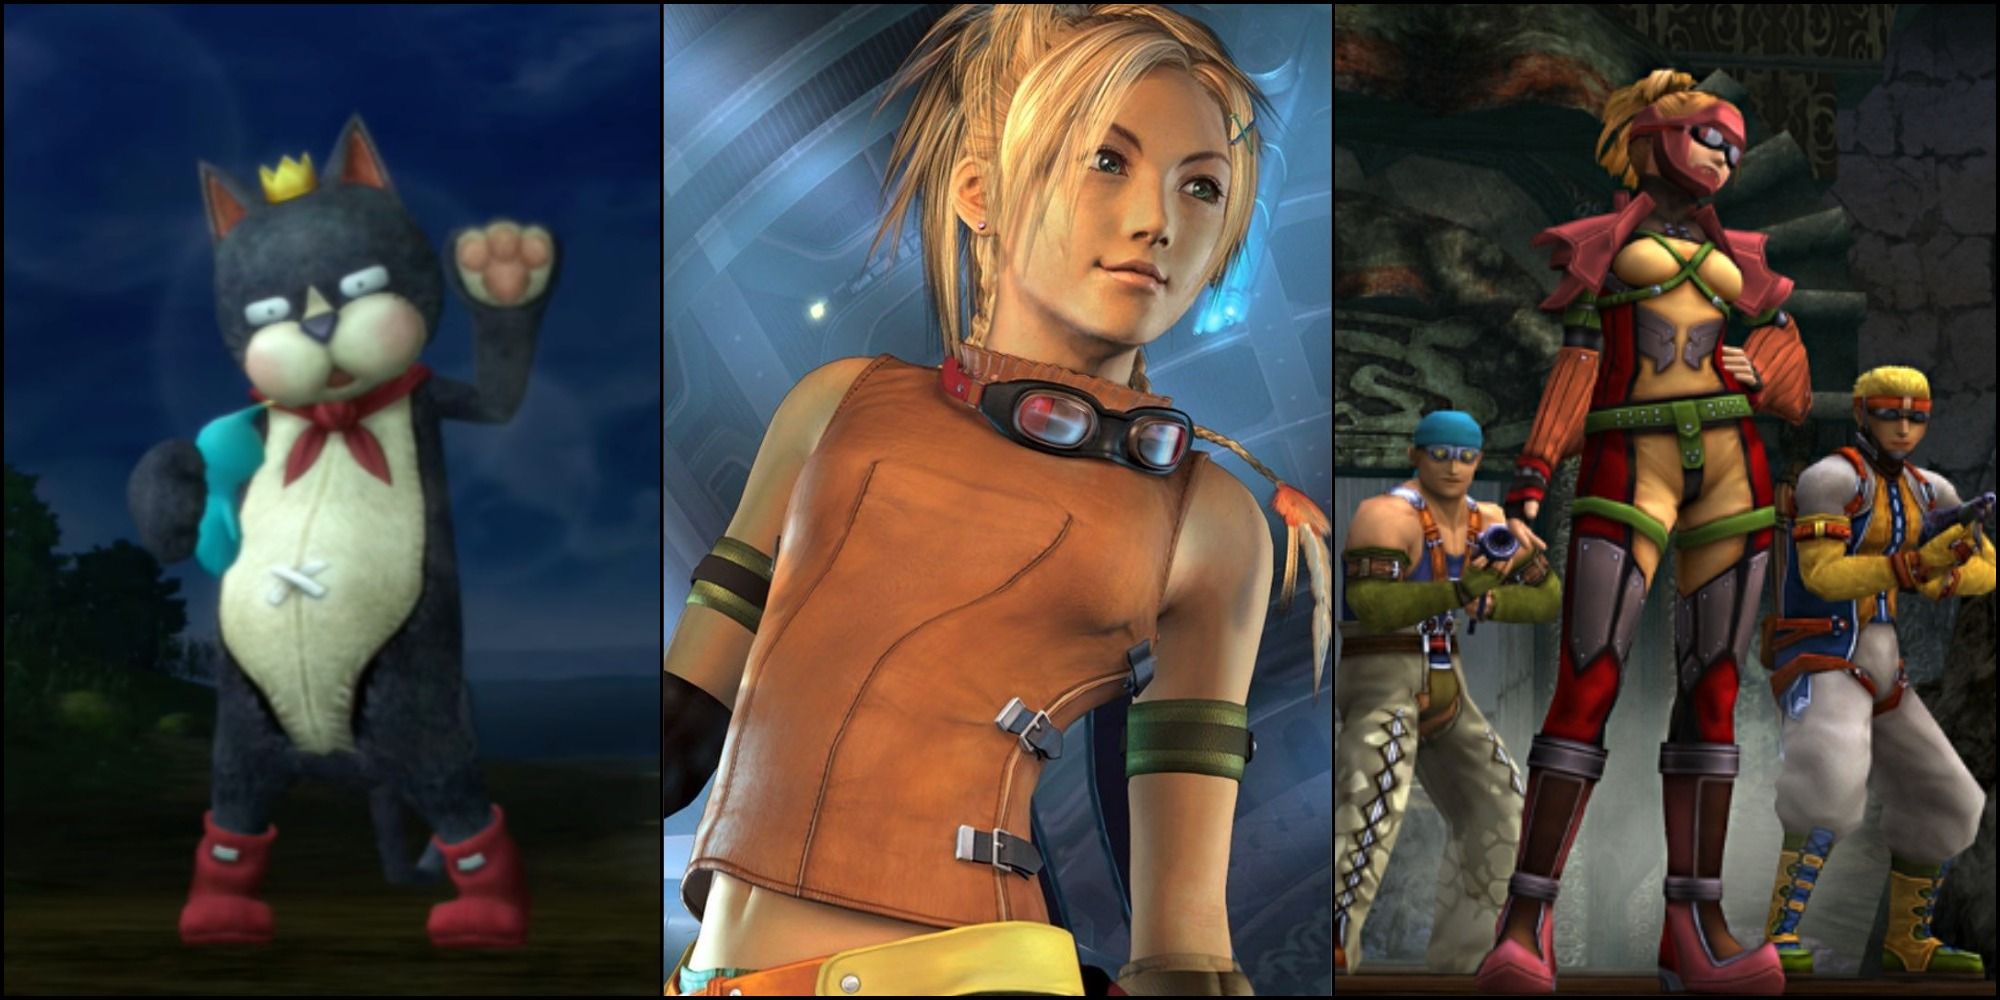 Rikku, a major character in Final Fantasy X